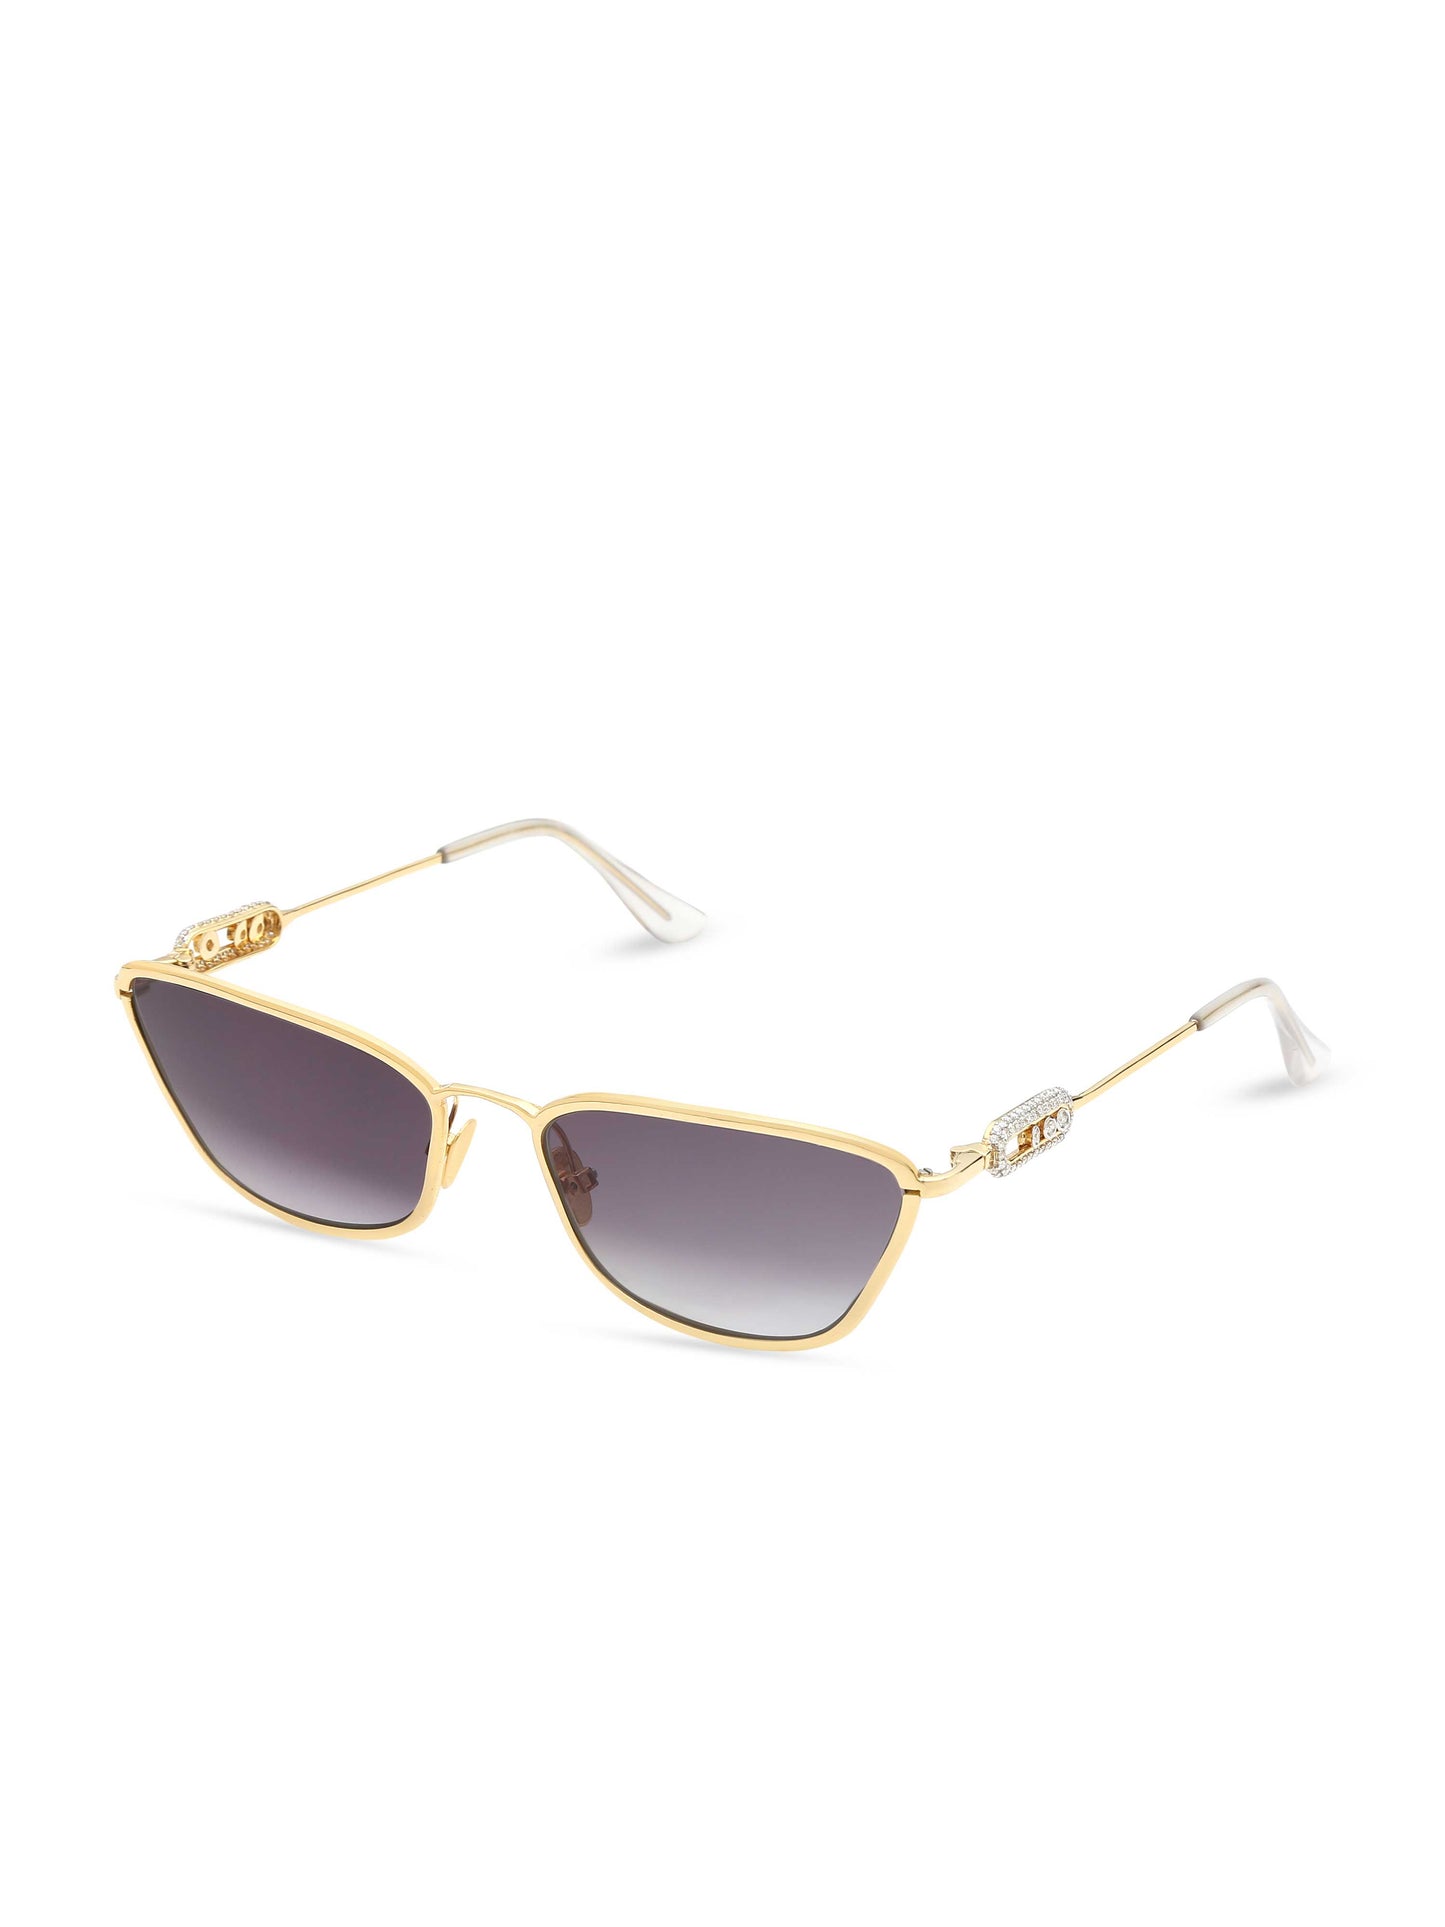 Diamond Channel Sunglasses